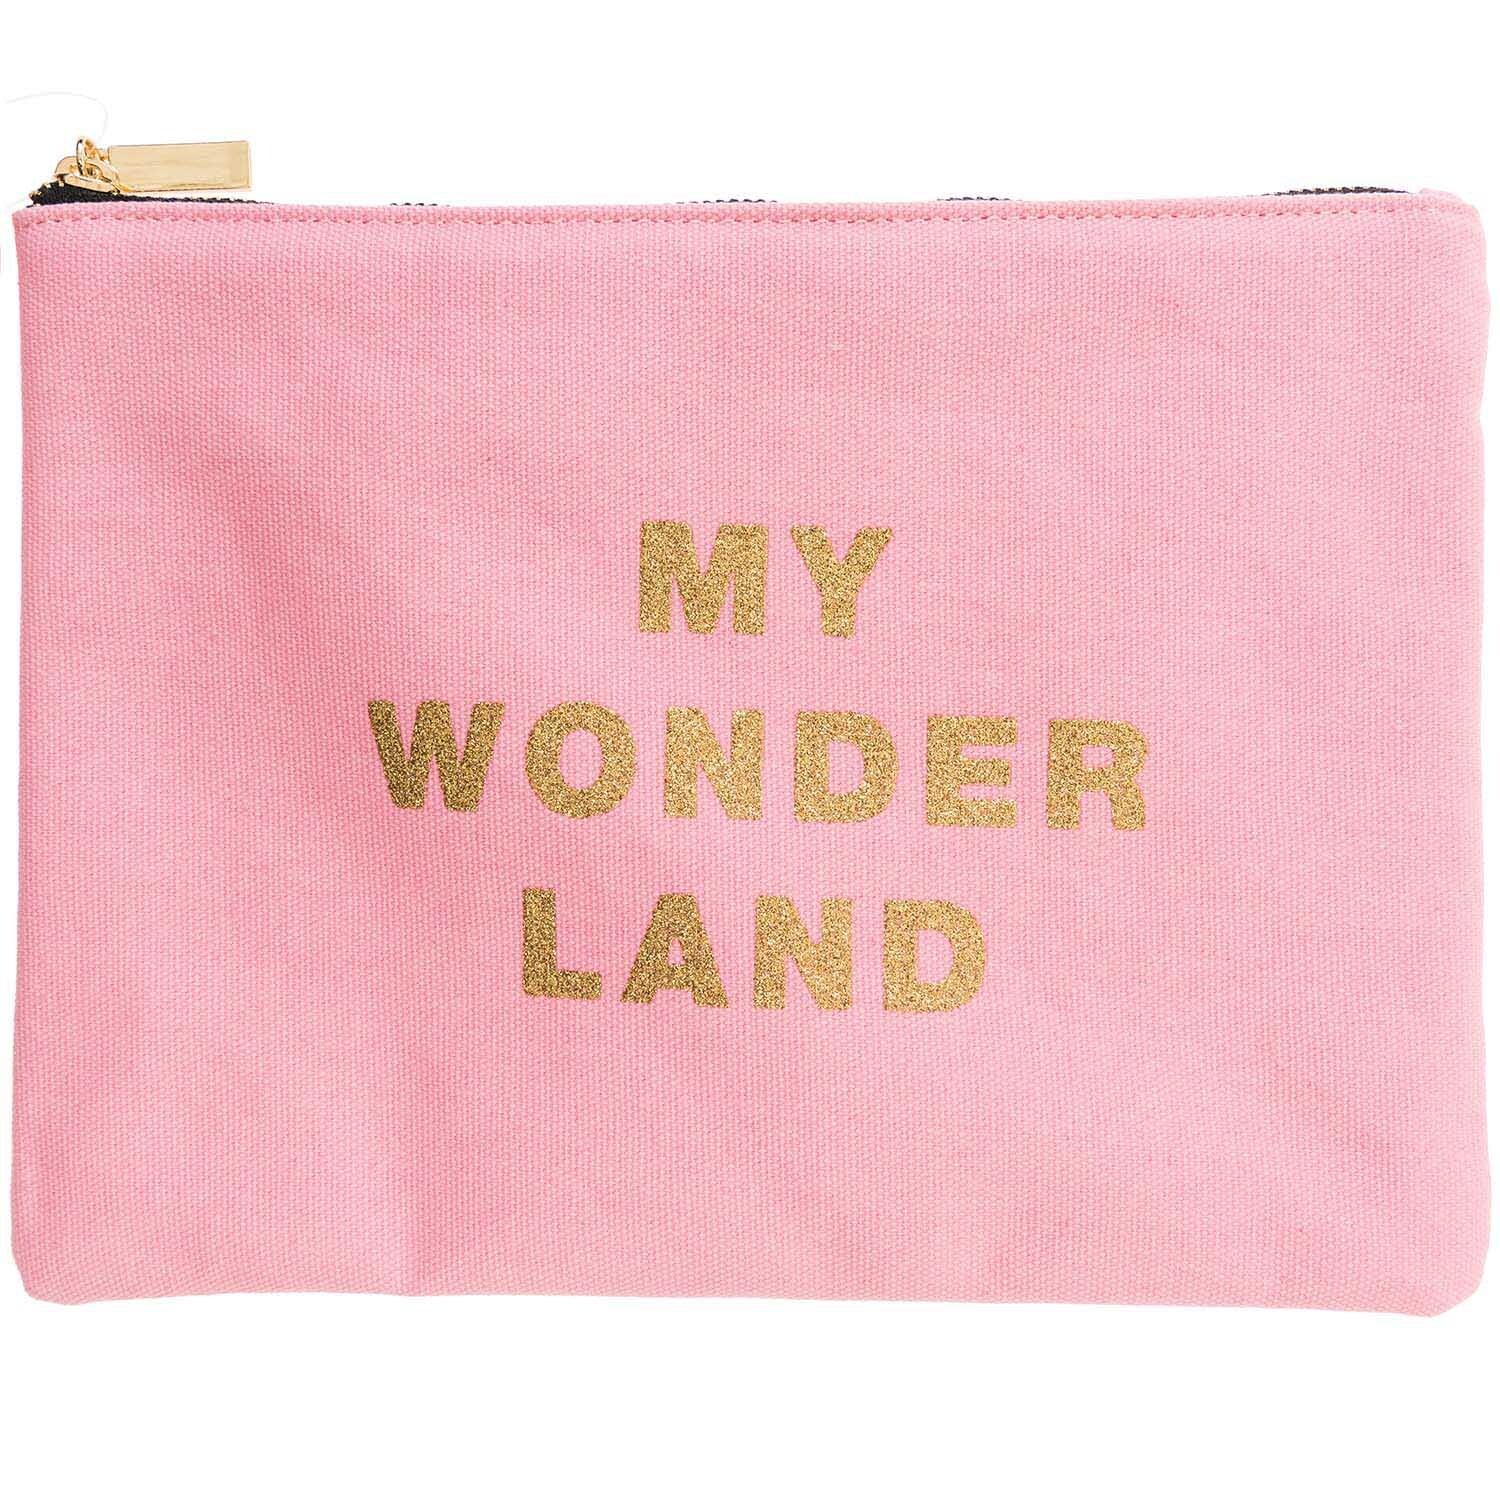 Paper Poetry Textil Tasche Wonderland rosa 21x28cm